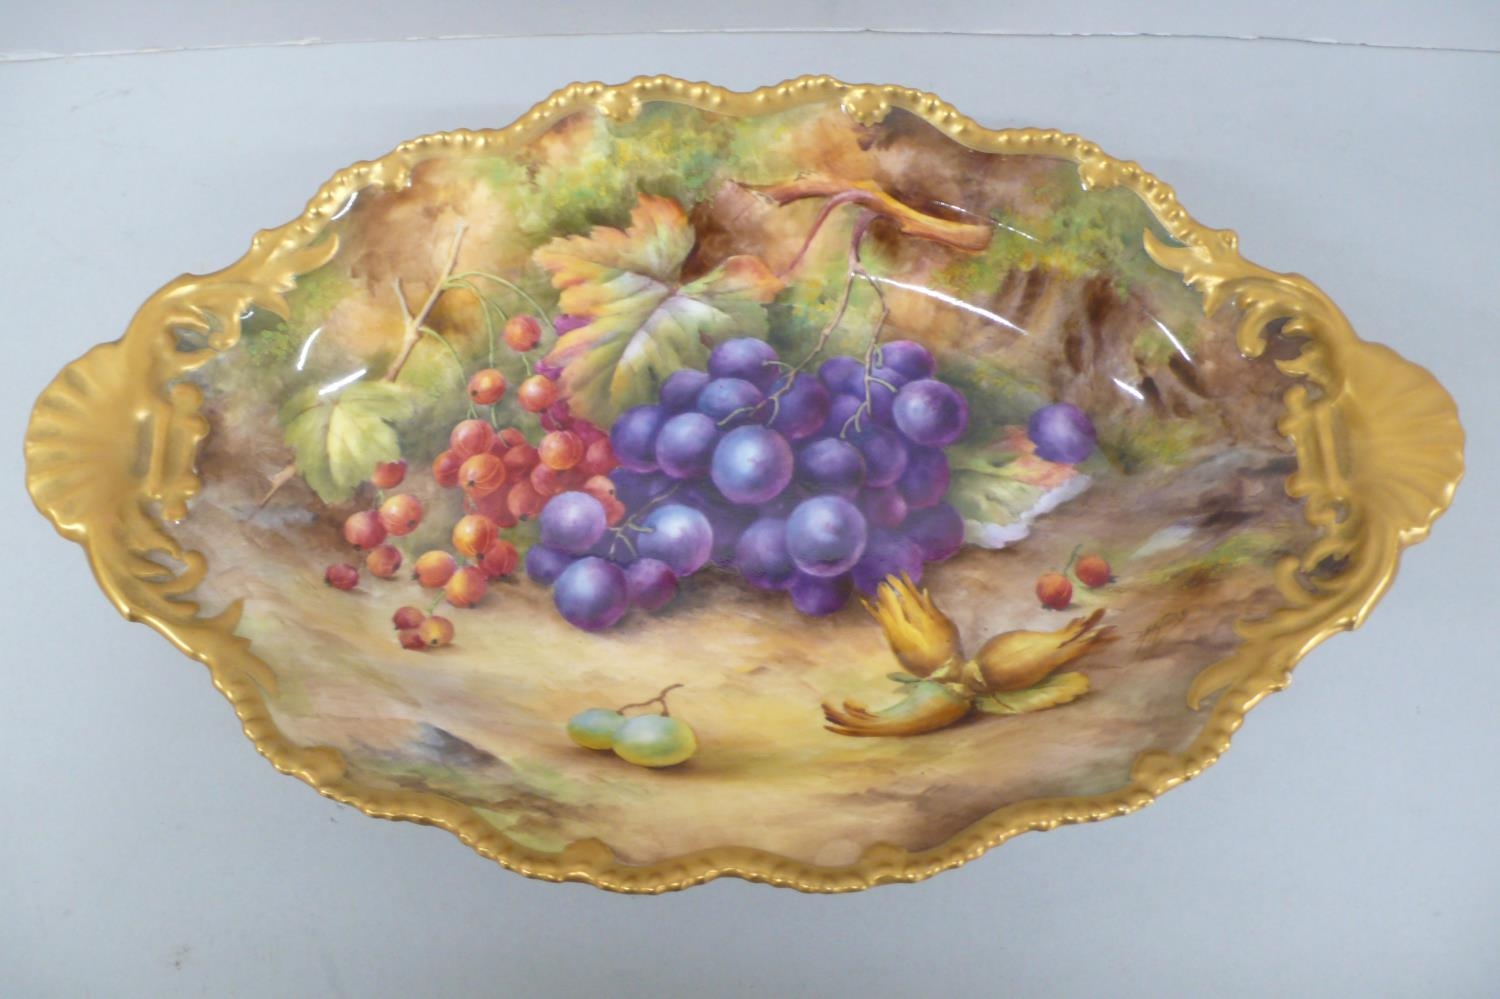 Royal Worcester fruit pattern fruit comport, red current, grape and hazel nut decoration, circa